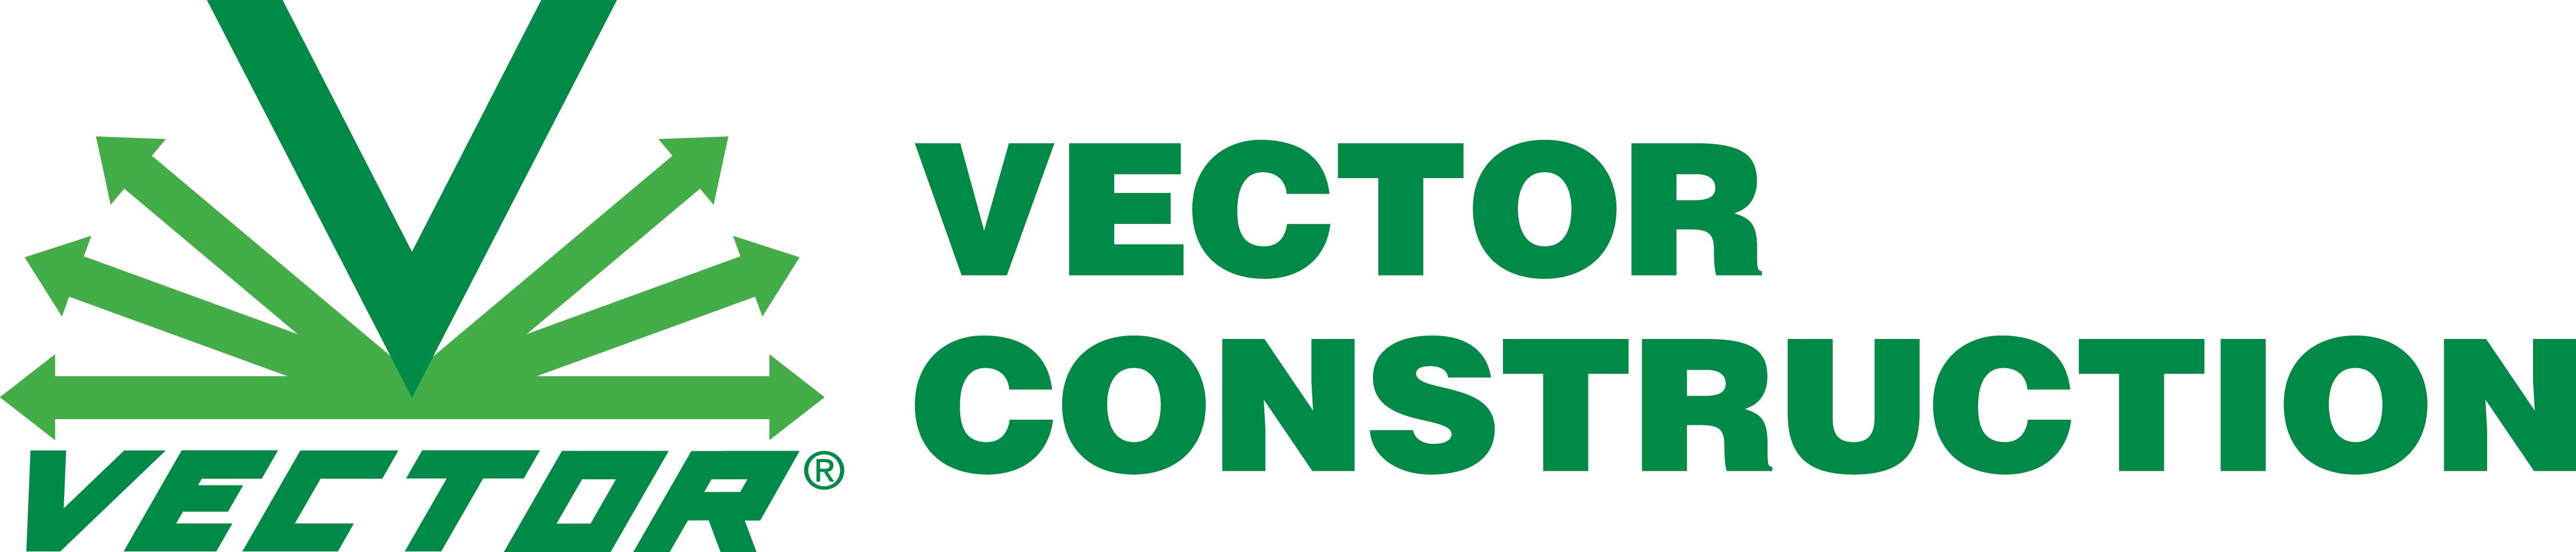 Vector Construction